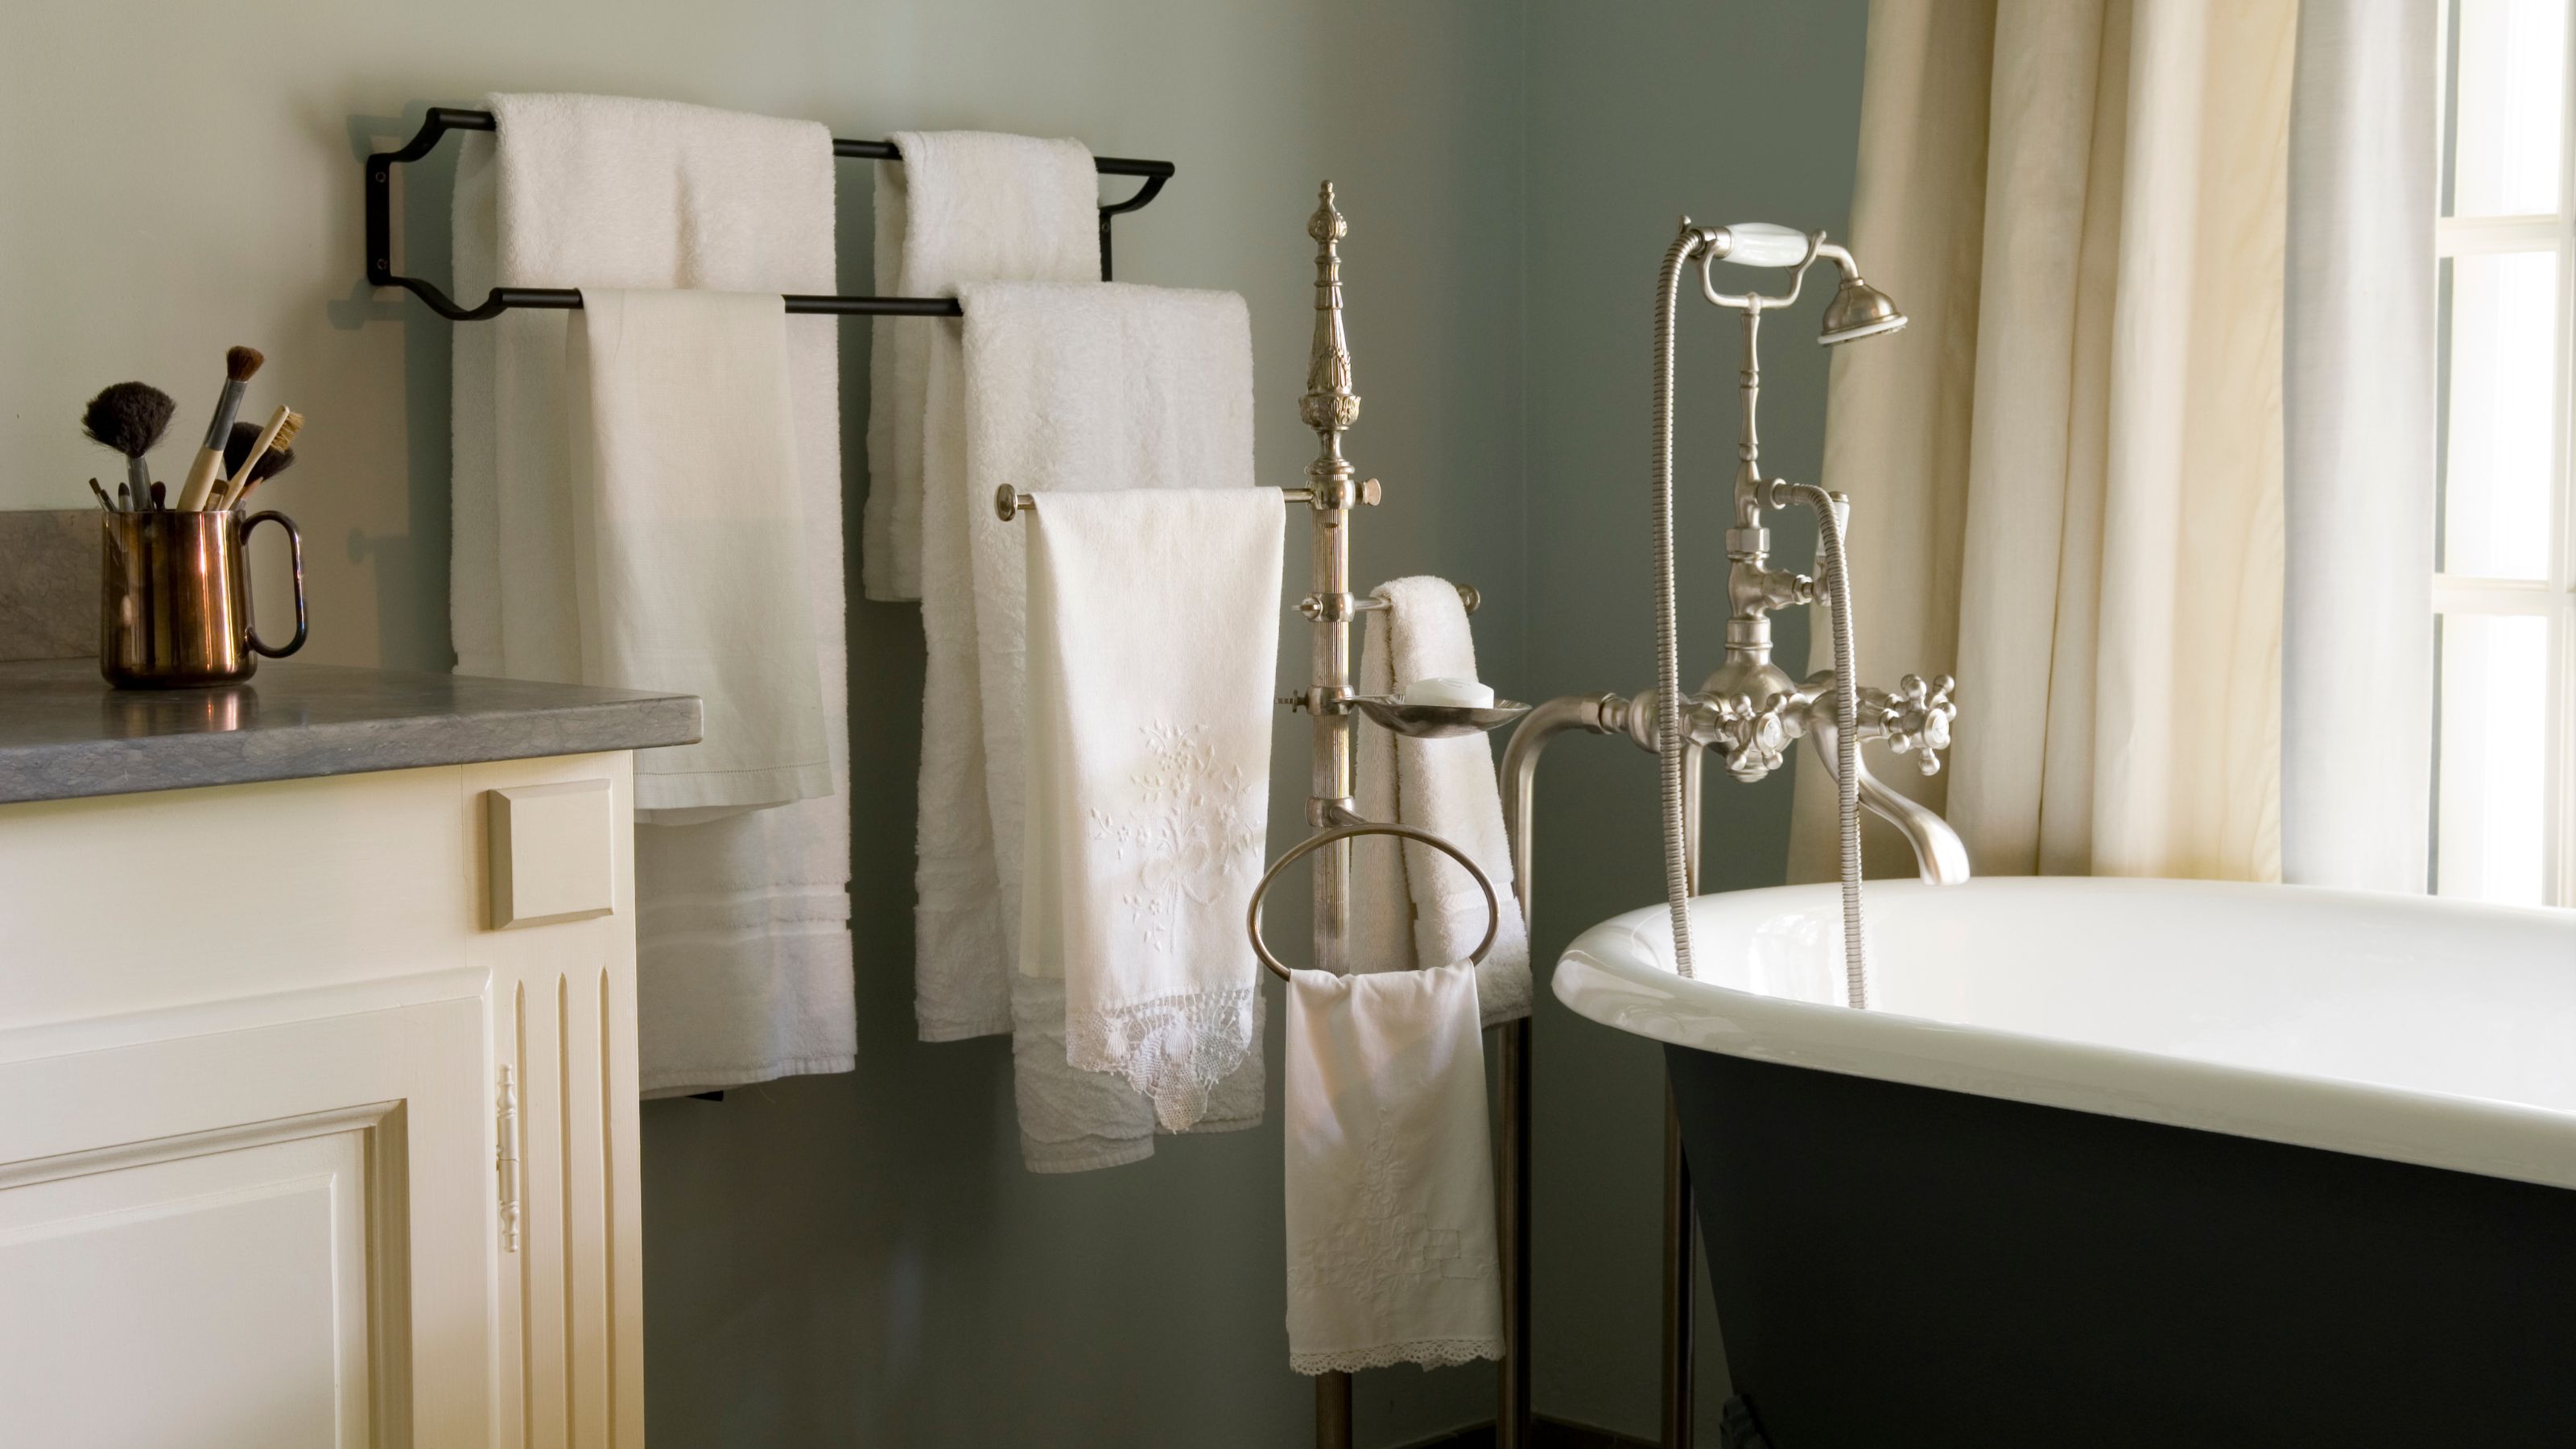 Premium Photo  Towels clean fresh fluffy towels and bath